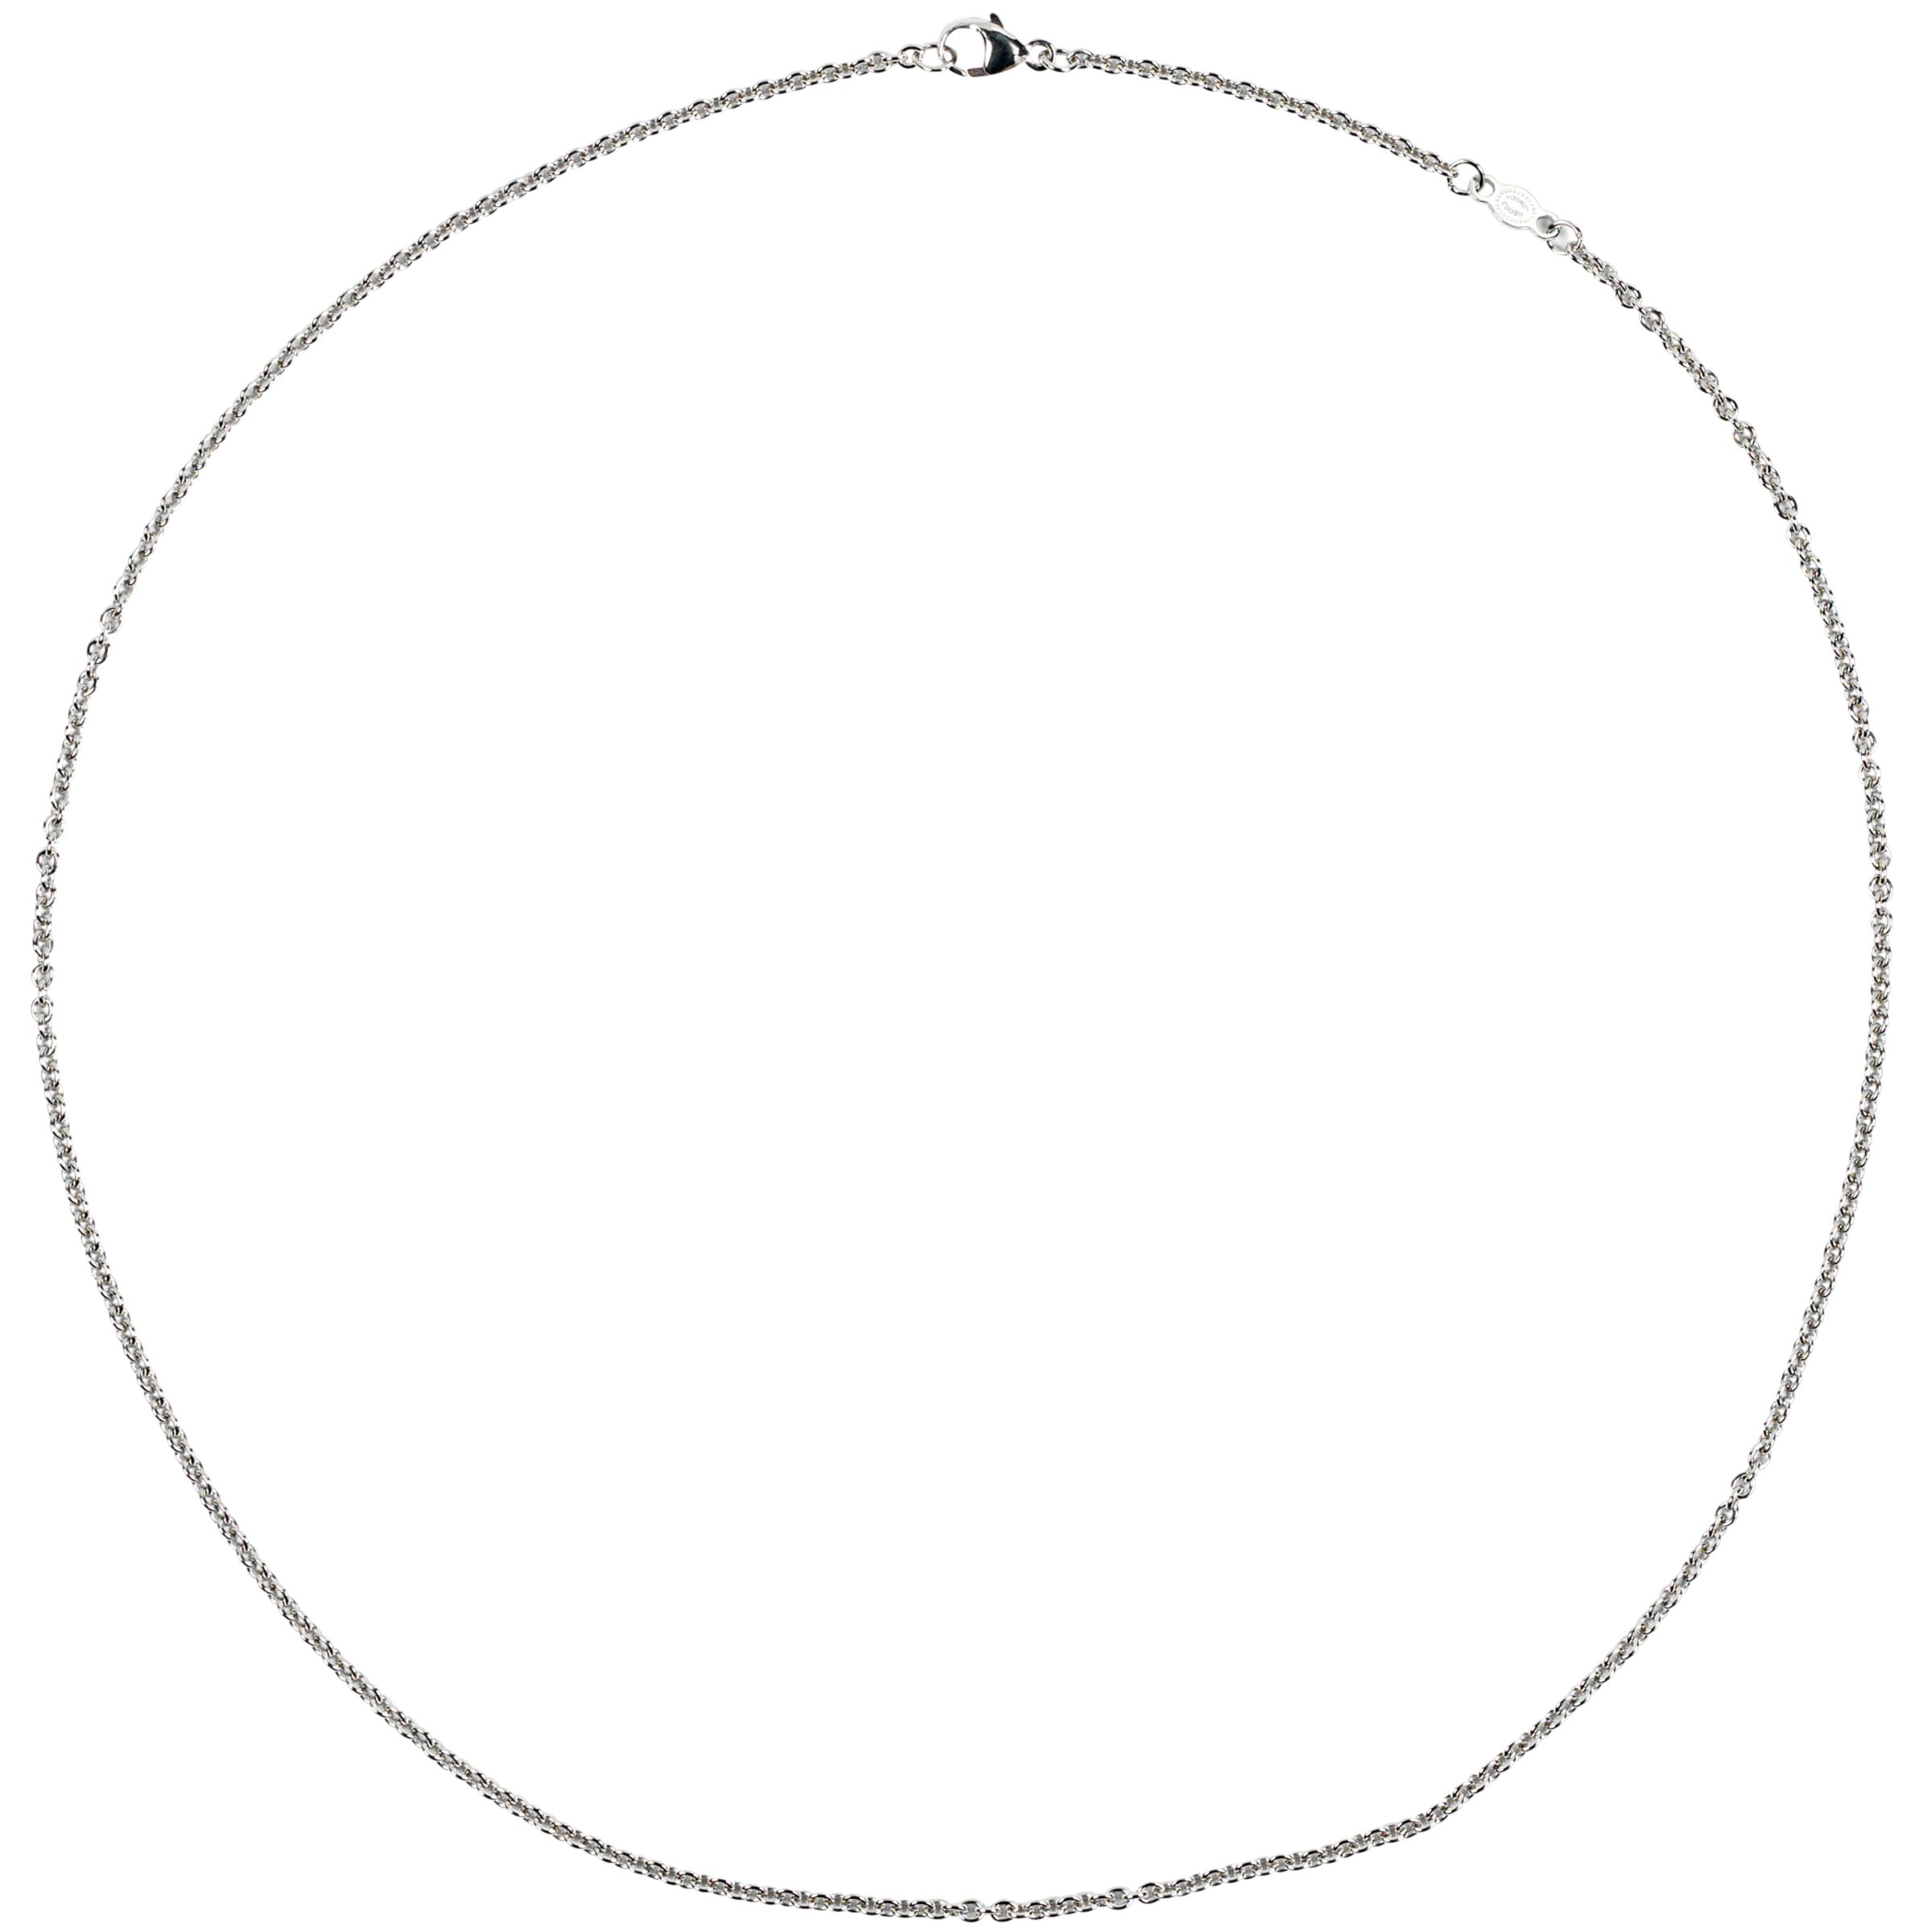 Georg Jensen White Gold Anchor Chain Necklace at JohnLewis